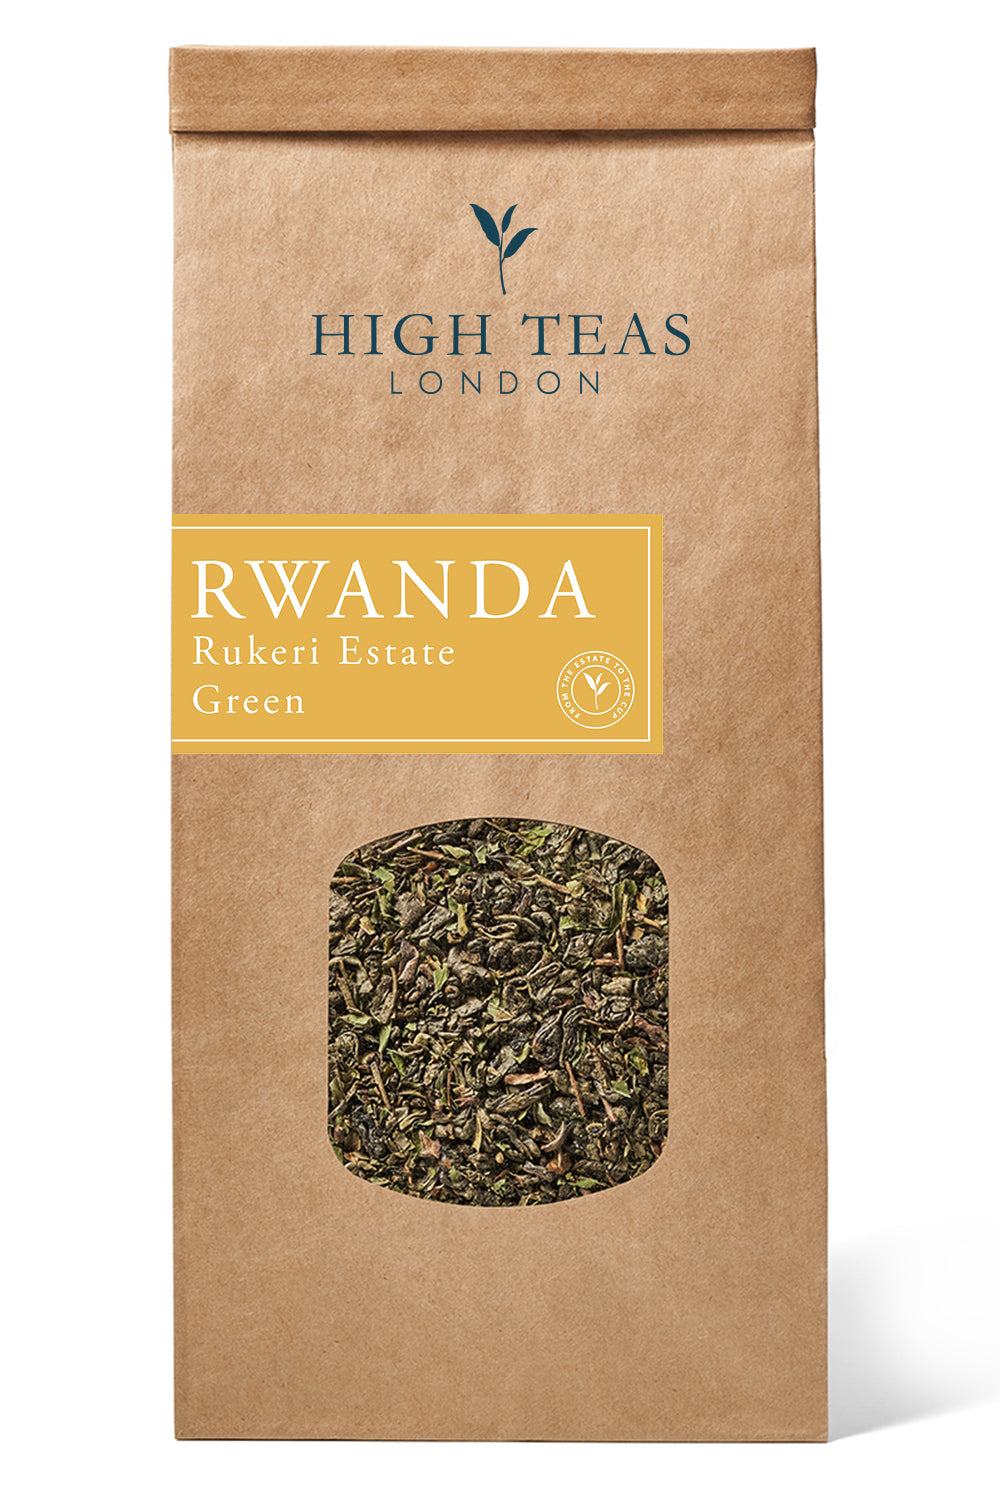 Rwanda - Rukeri Estate Green, OP (Orthodox)-250g-Loose Leaf Tea-High Teas